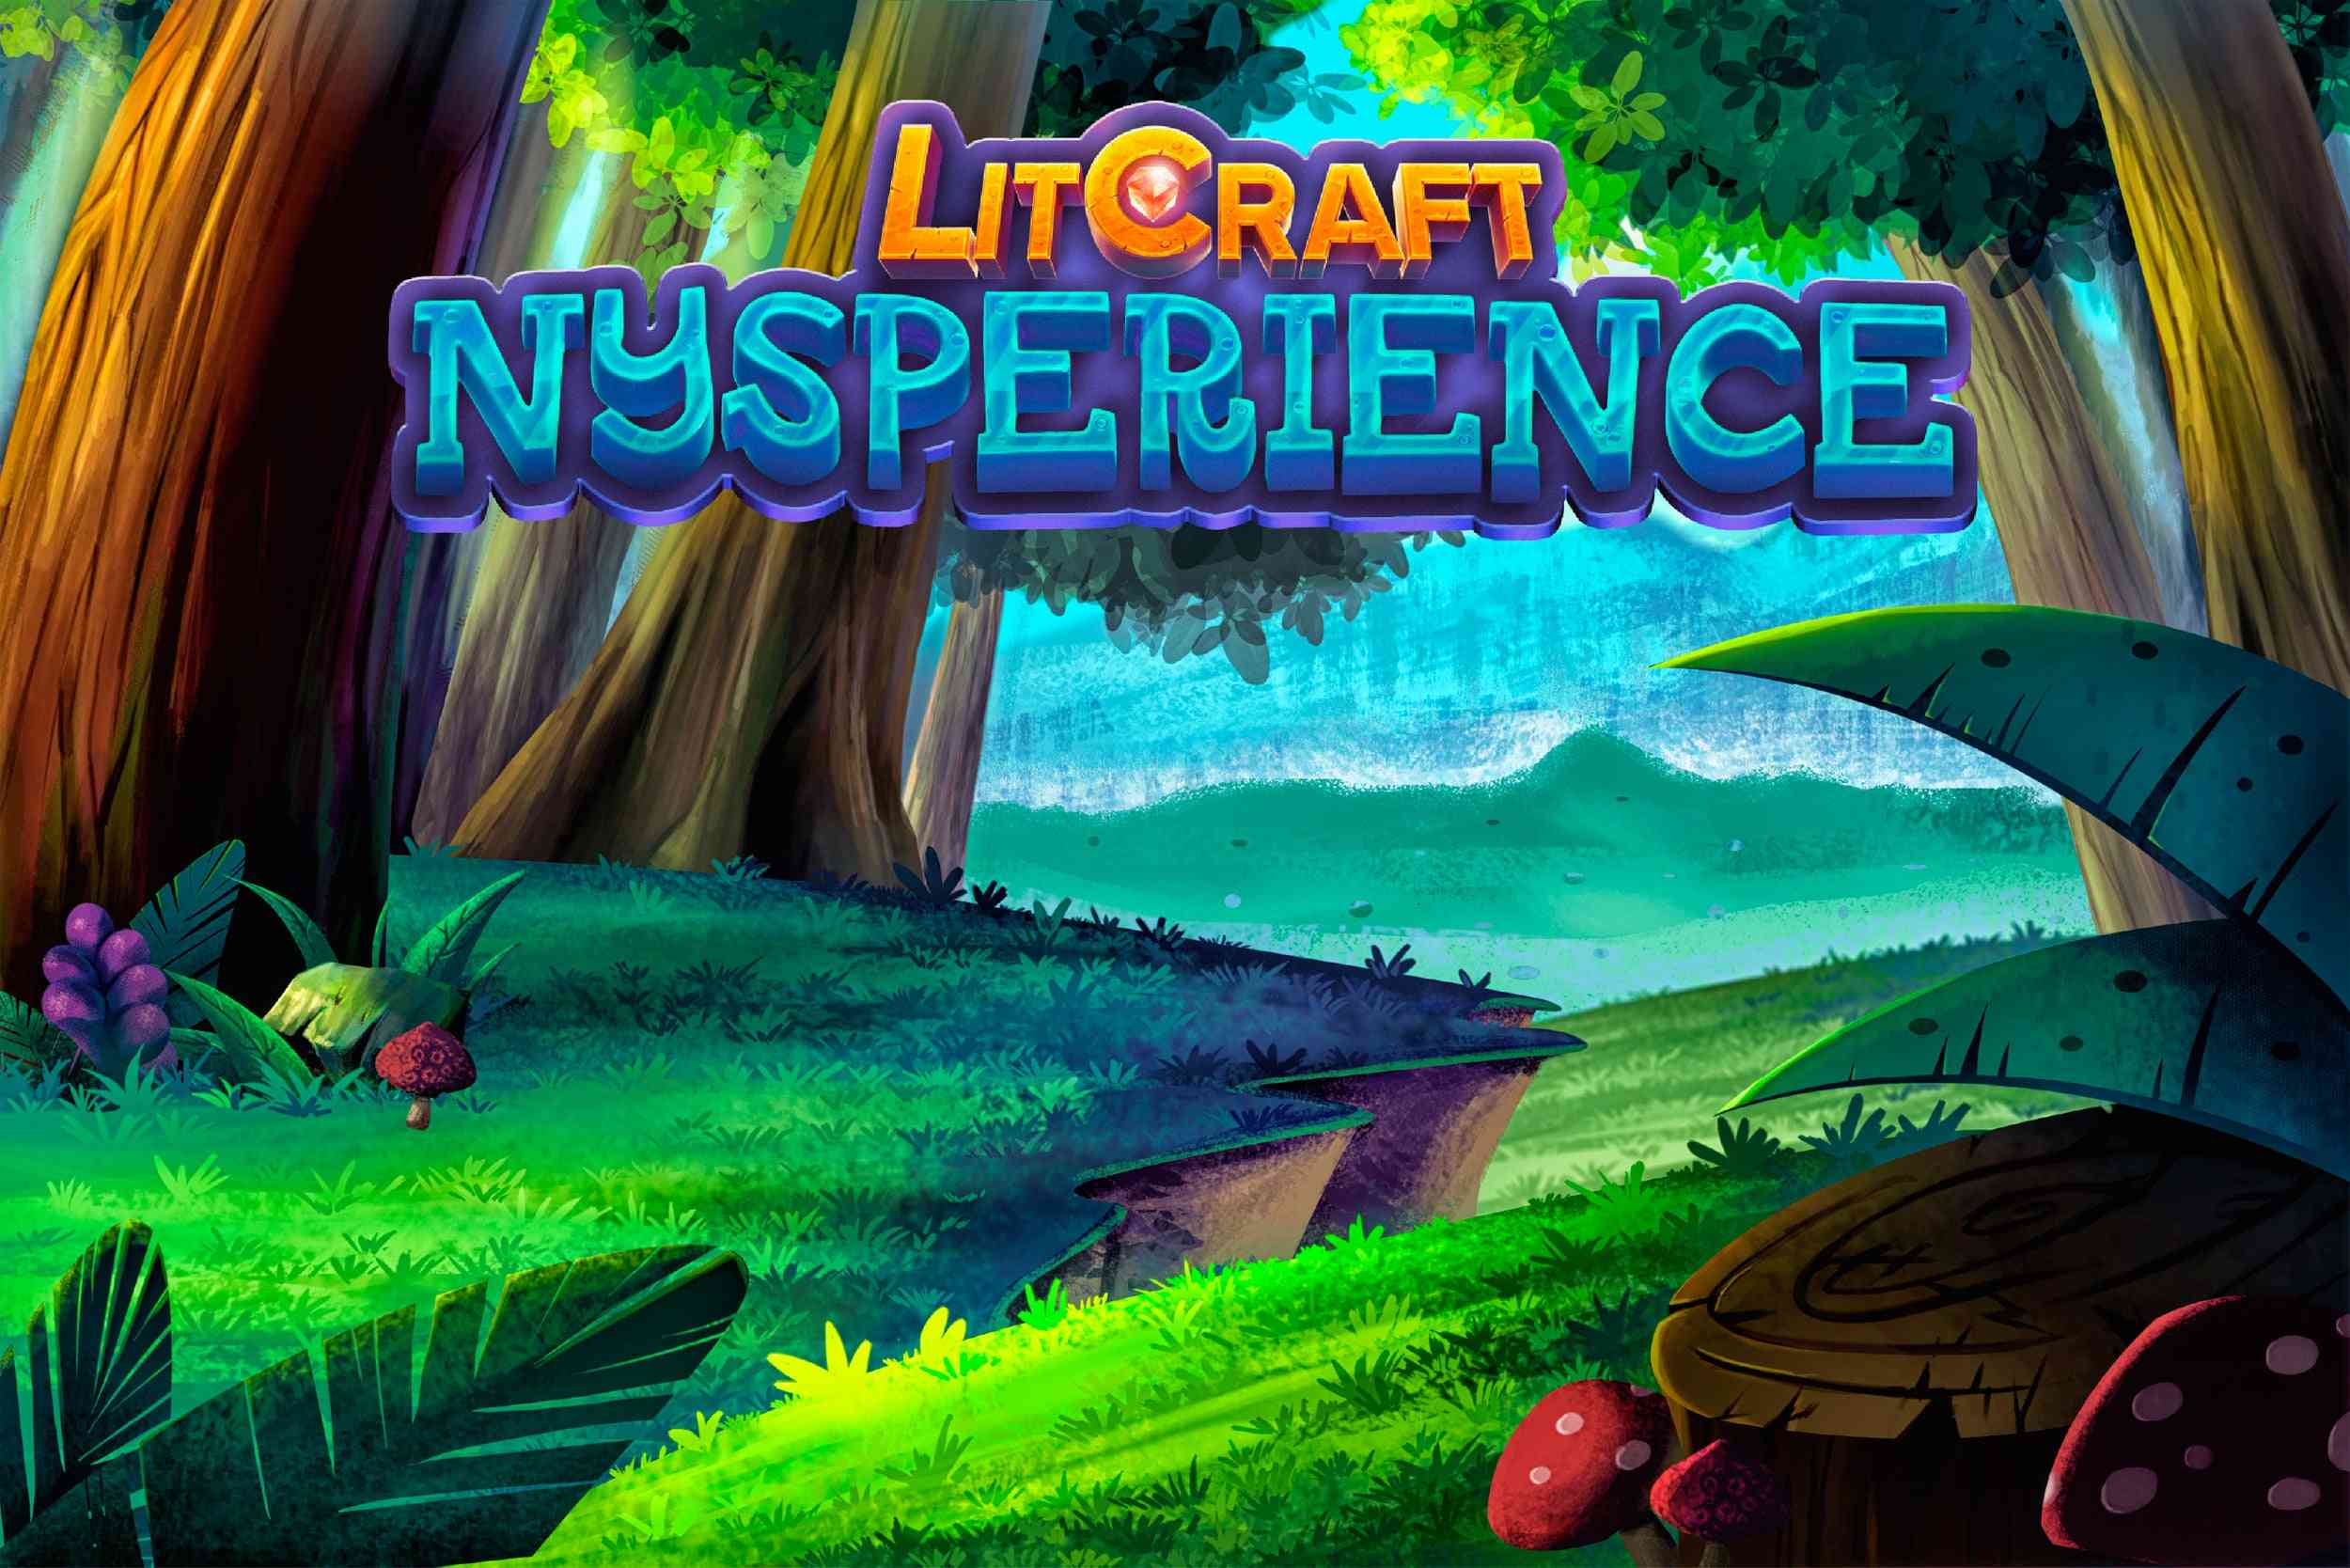 LitCraft: Nysperience - Oyun İncelemesi